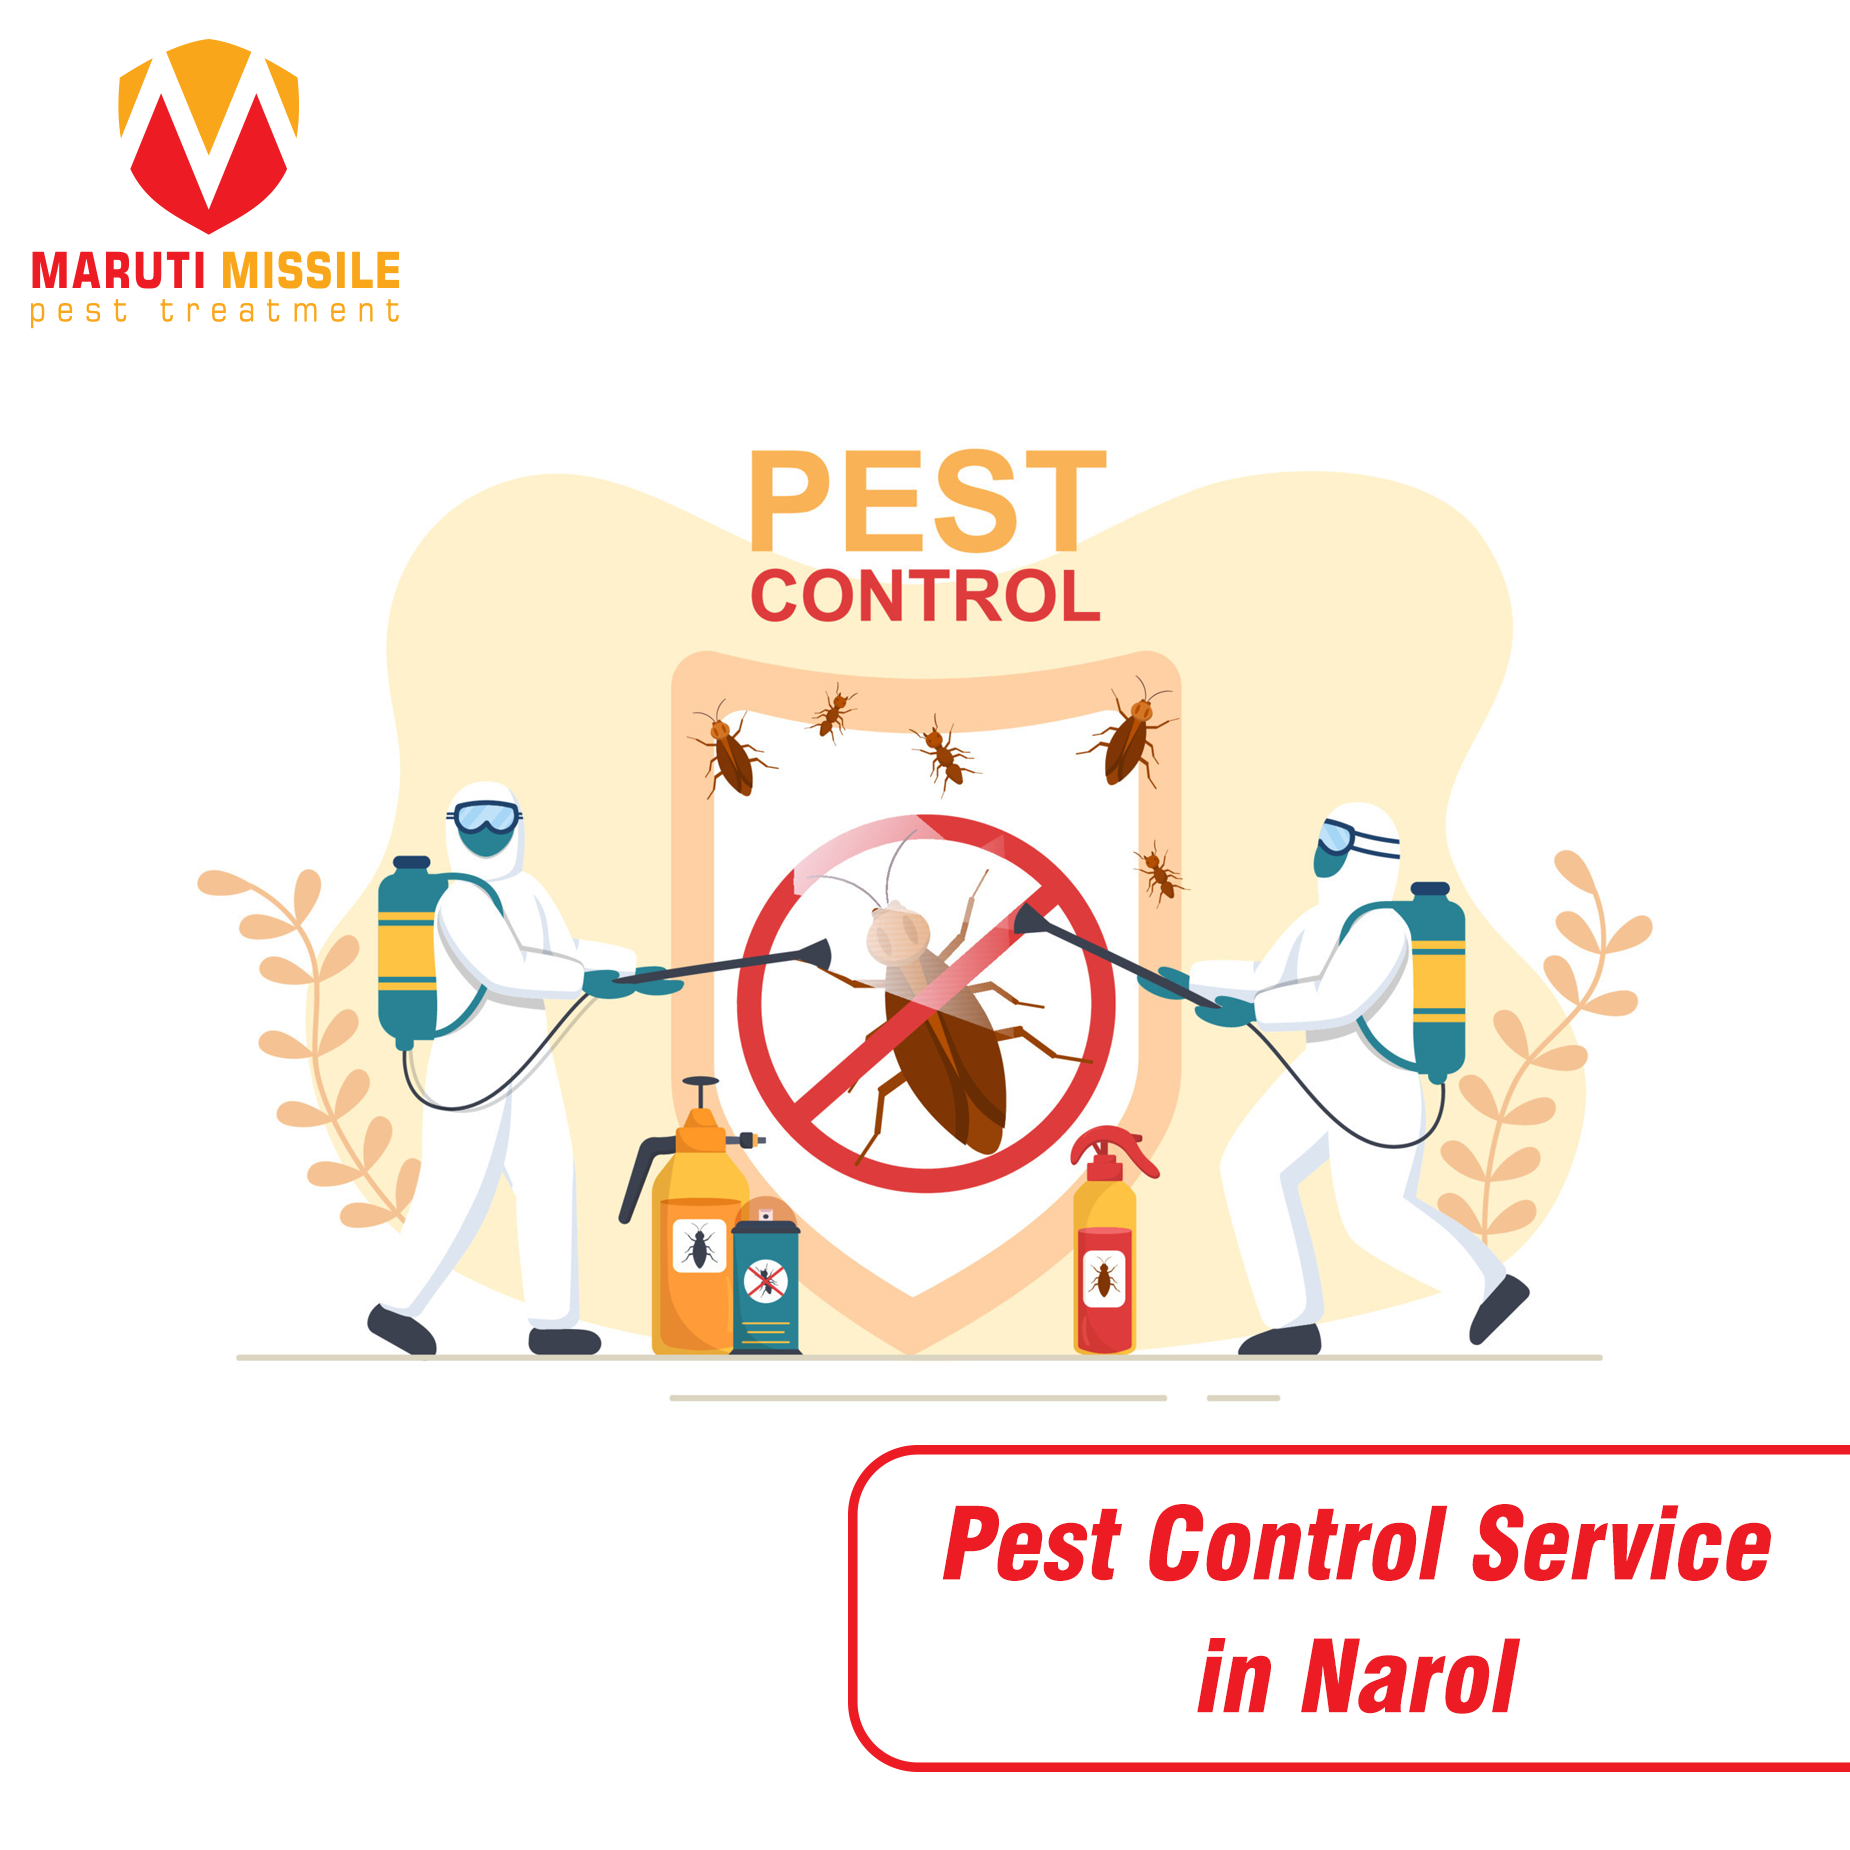 Pest Control Service in Narol